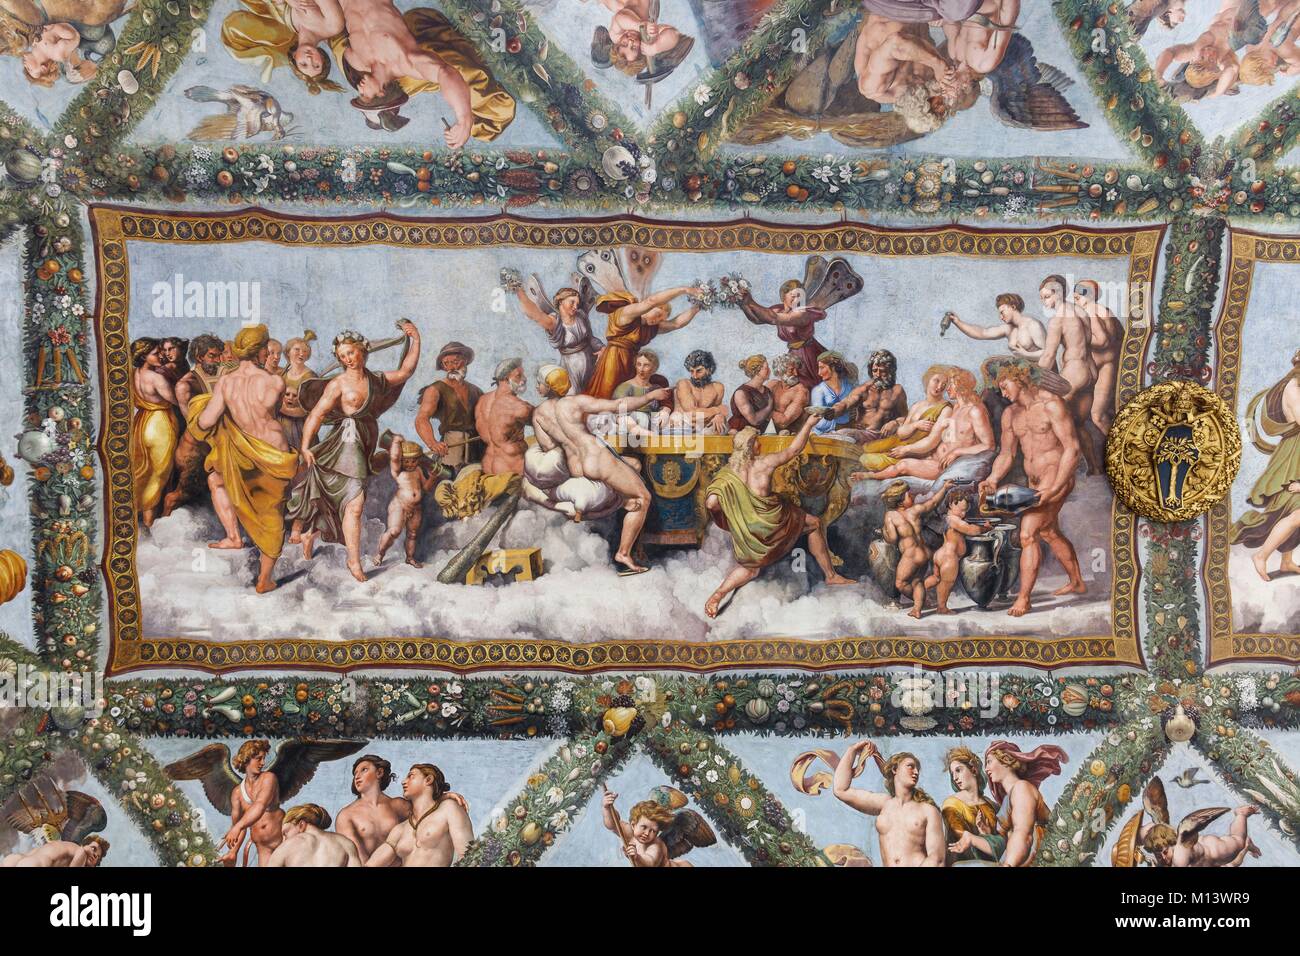 Italia, Lazio, Roma, centro histórico catalogado como Patrimonio Mundial por la UNESCO, villa Farnesina, Rafael fresco el banquete de los dioses Foto de stock